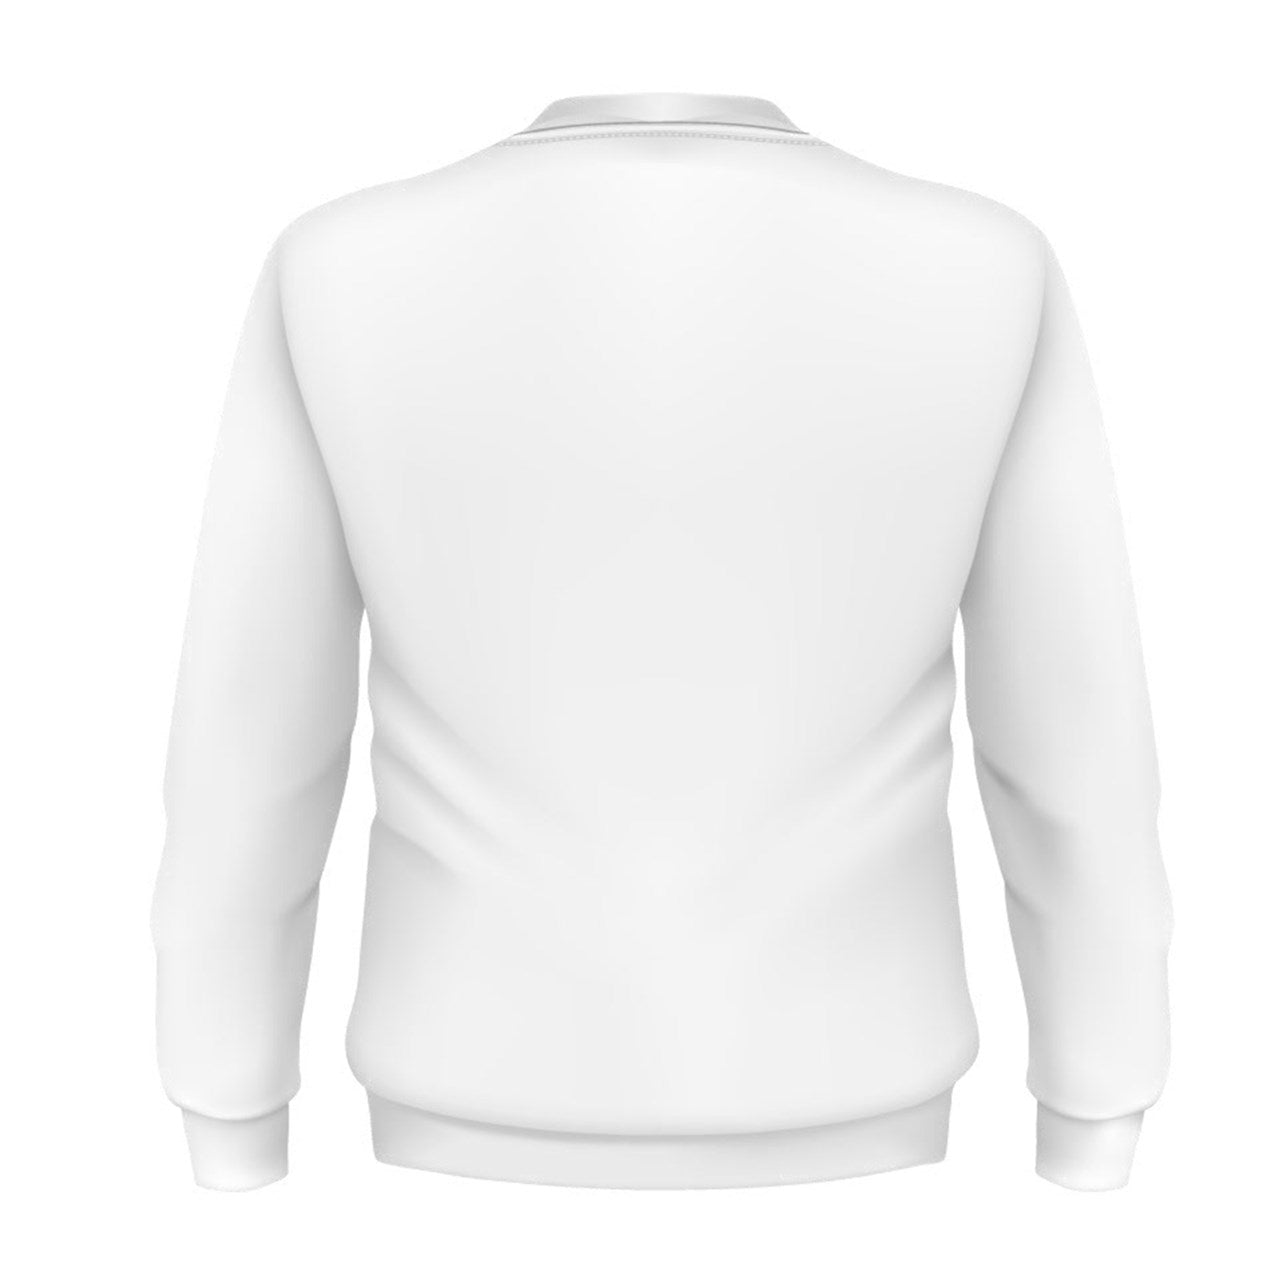 FJ's white Sleuthing Sweater